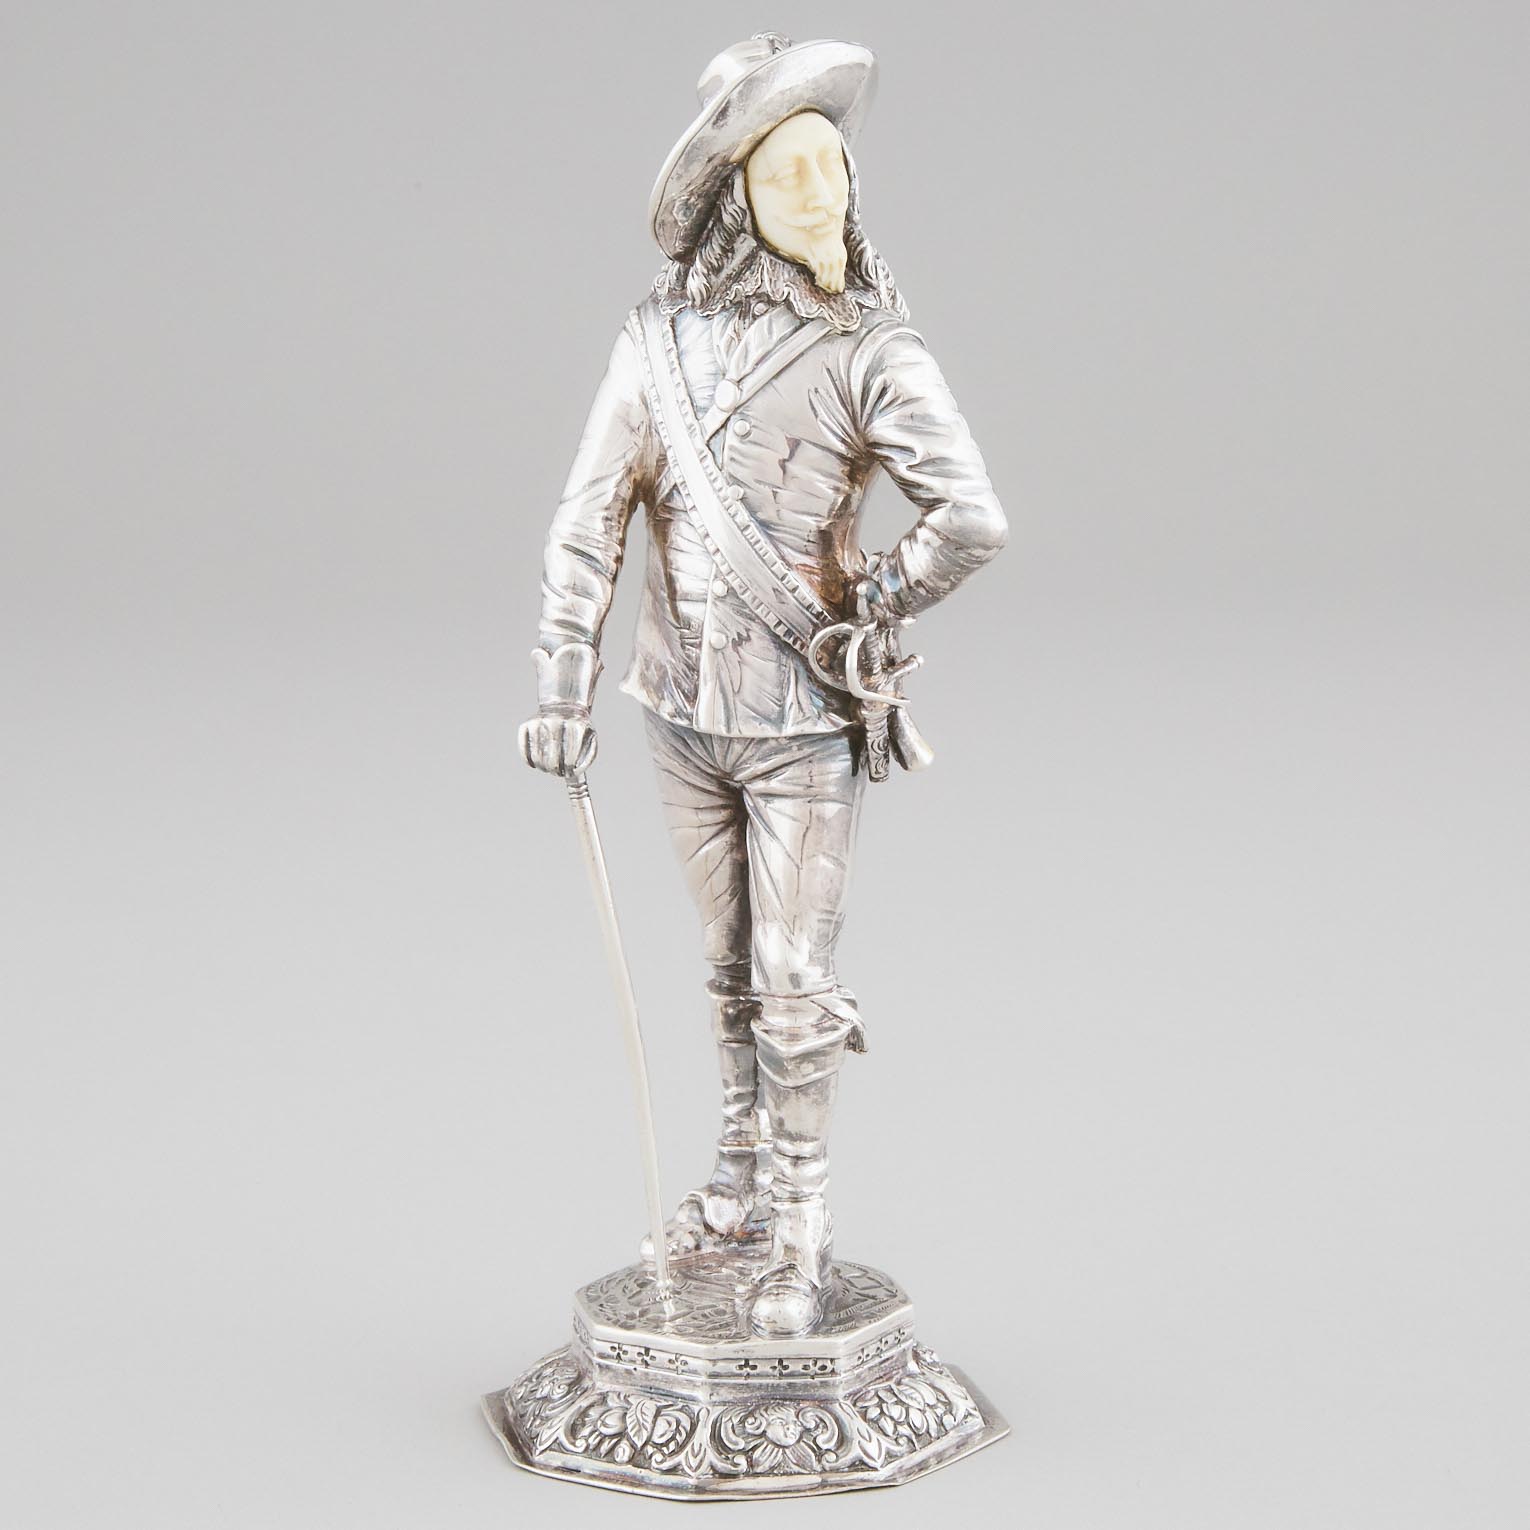 German Silver and Carved Ivory Figure of a Cavalier, Ludwig Neresheimer & Co., Hanau, c.1910